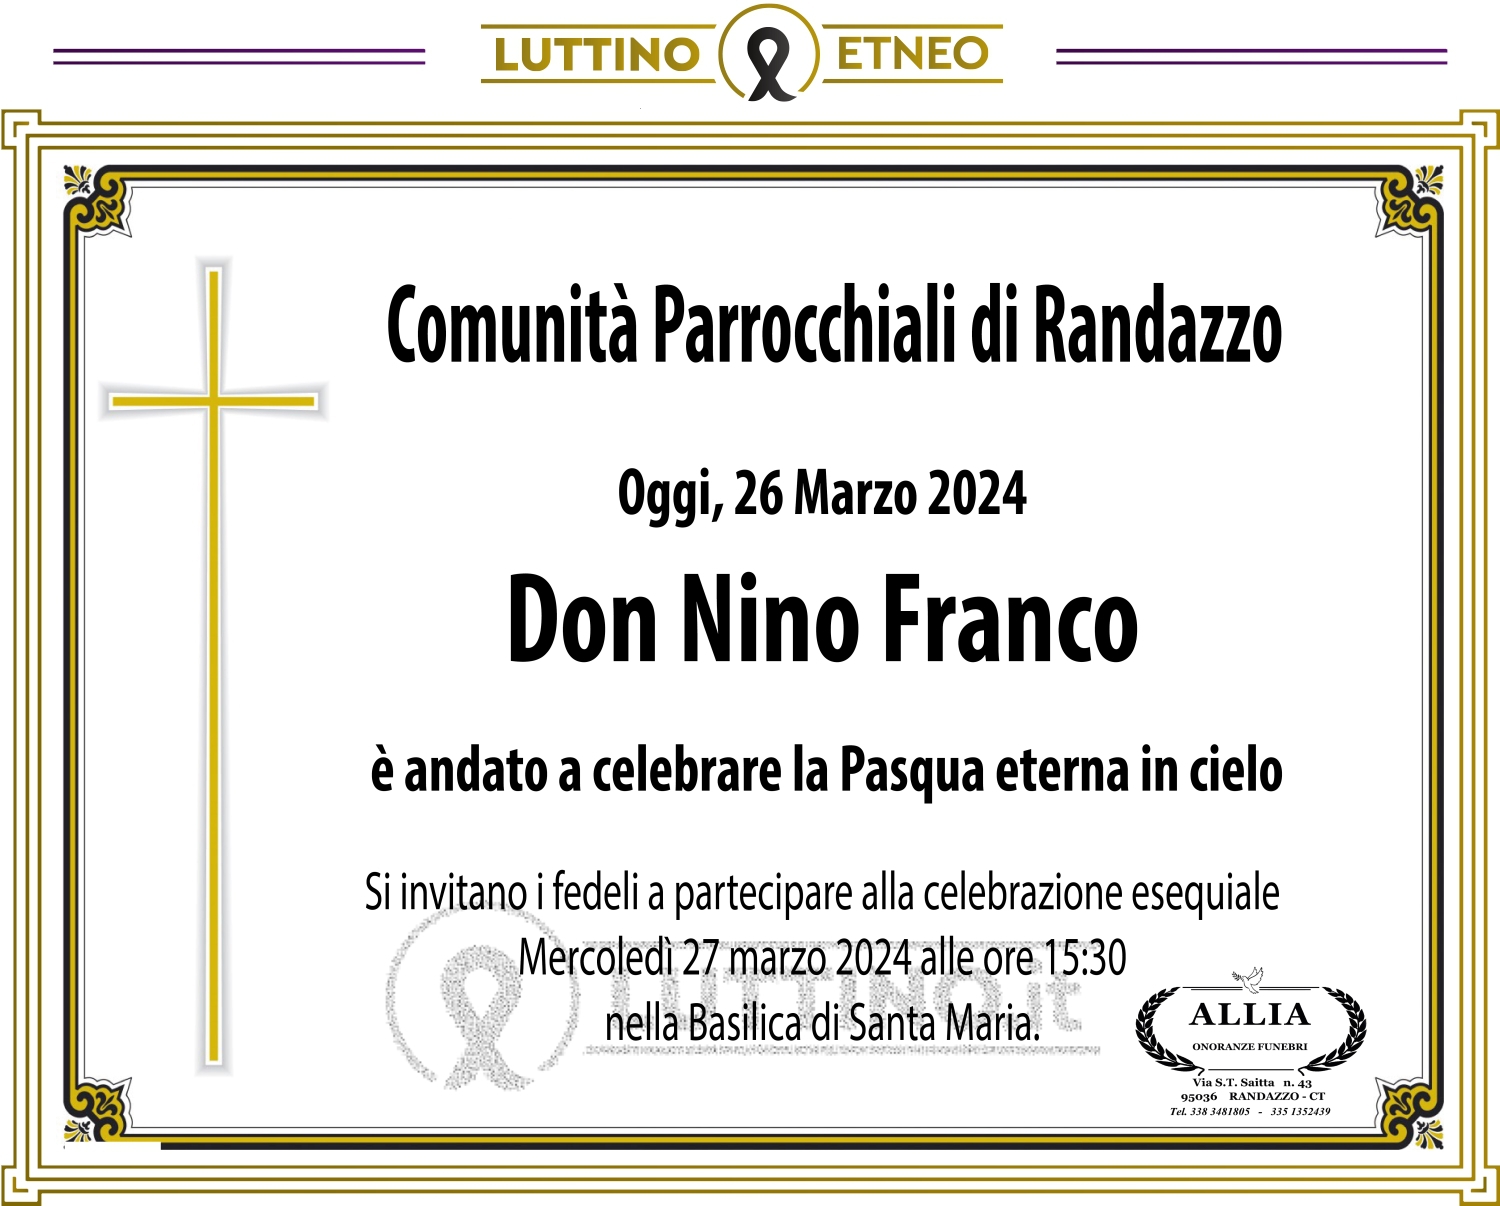 Don Nino Franco